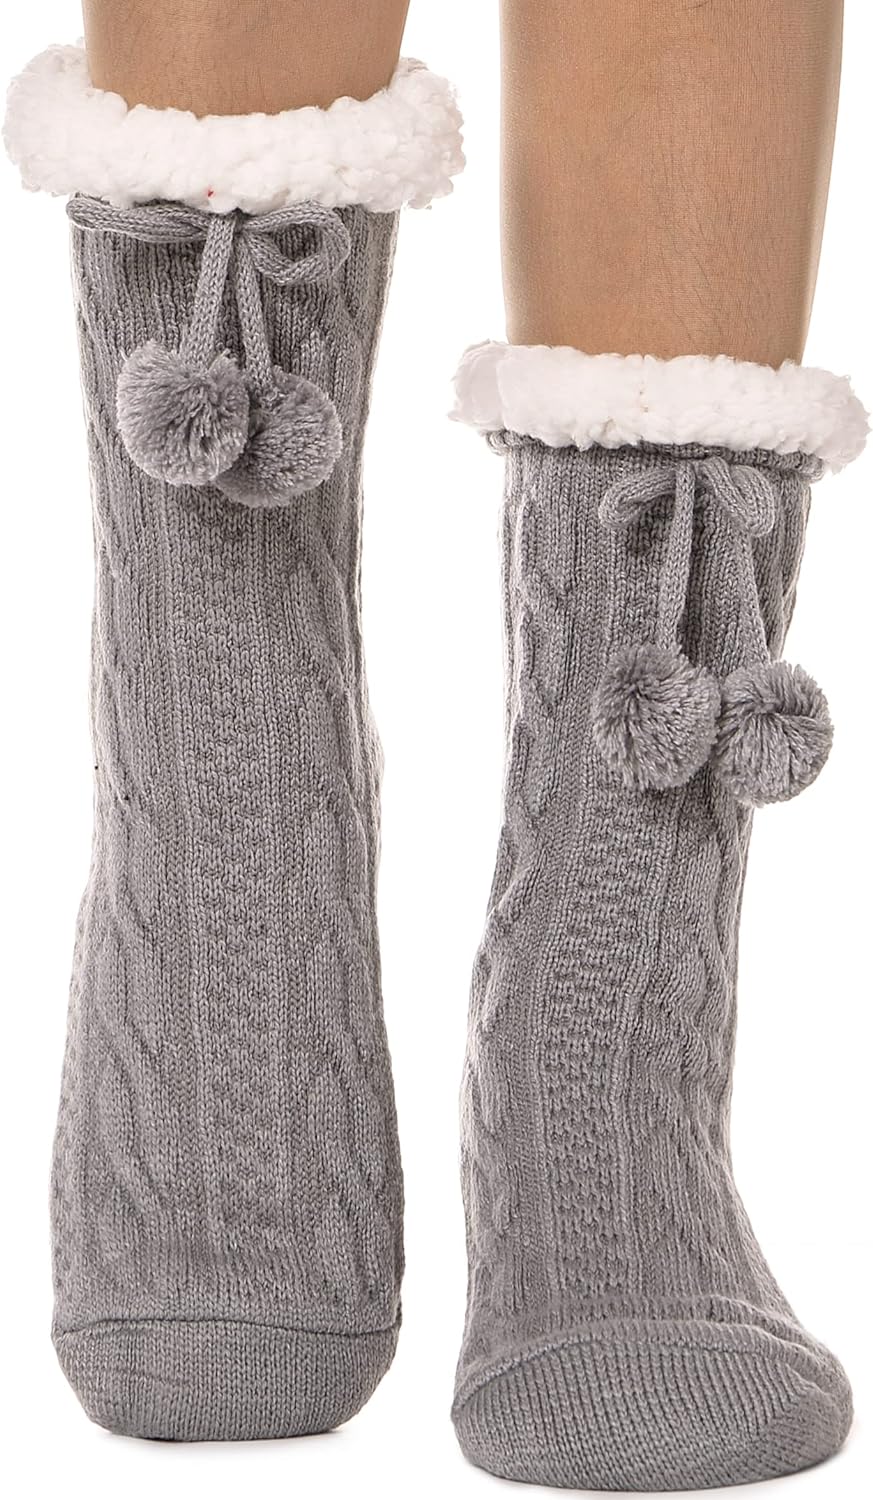 EBMORE Slipper Fluffy Socks for Women Bed Cosy Non Slip Gift for Women Fuzzy Cabin Winter Warm Soft Fleece Comfy Thick Christmas Stocking Stuffer with Grips Socks